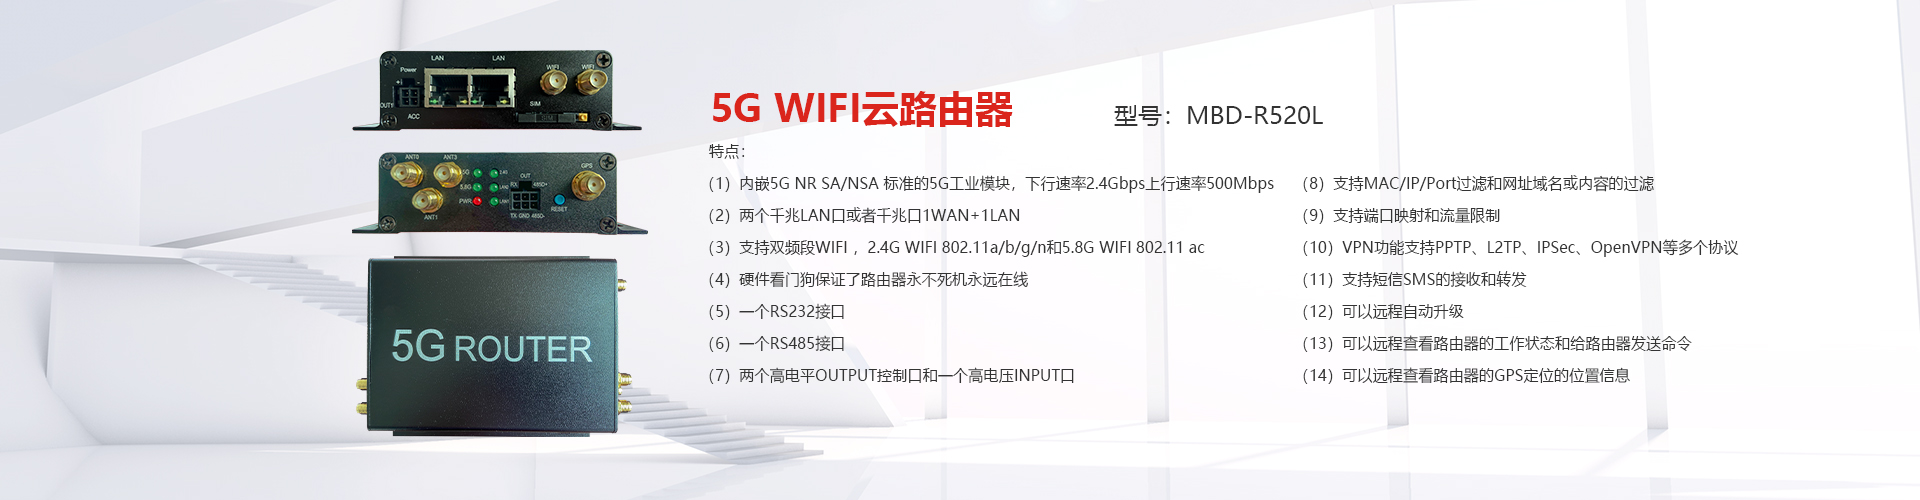 5G Router MBD-R520L